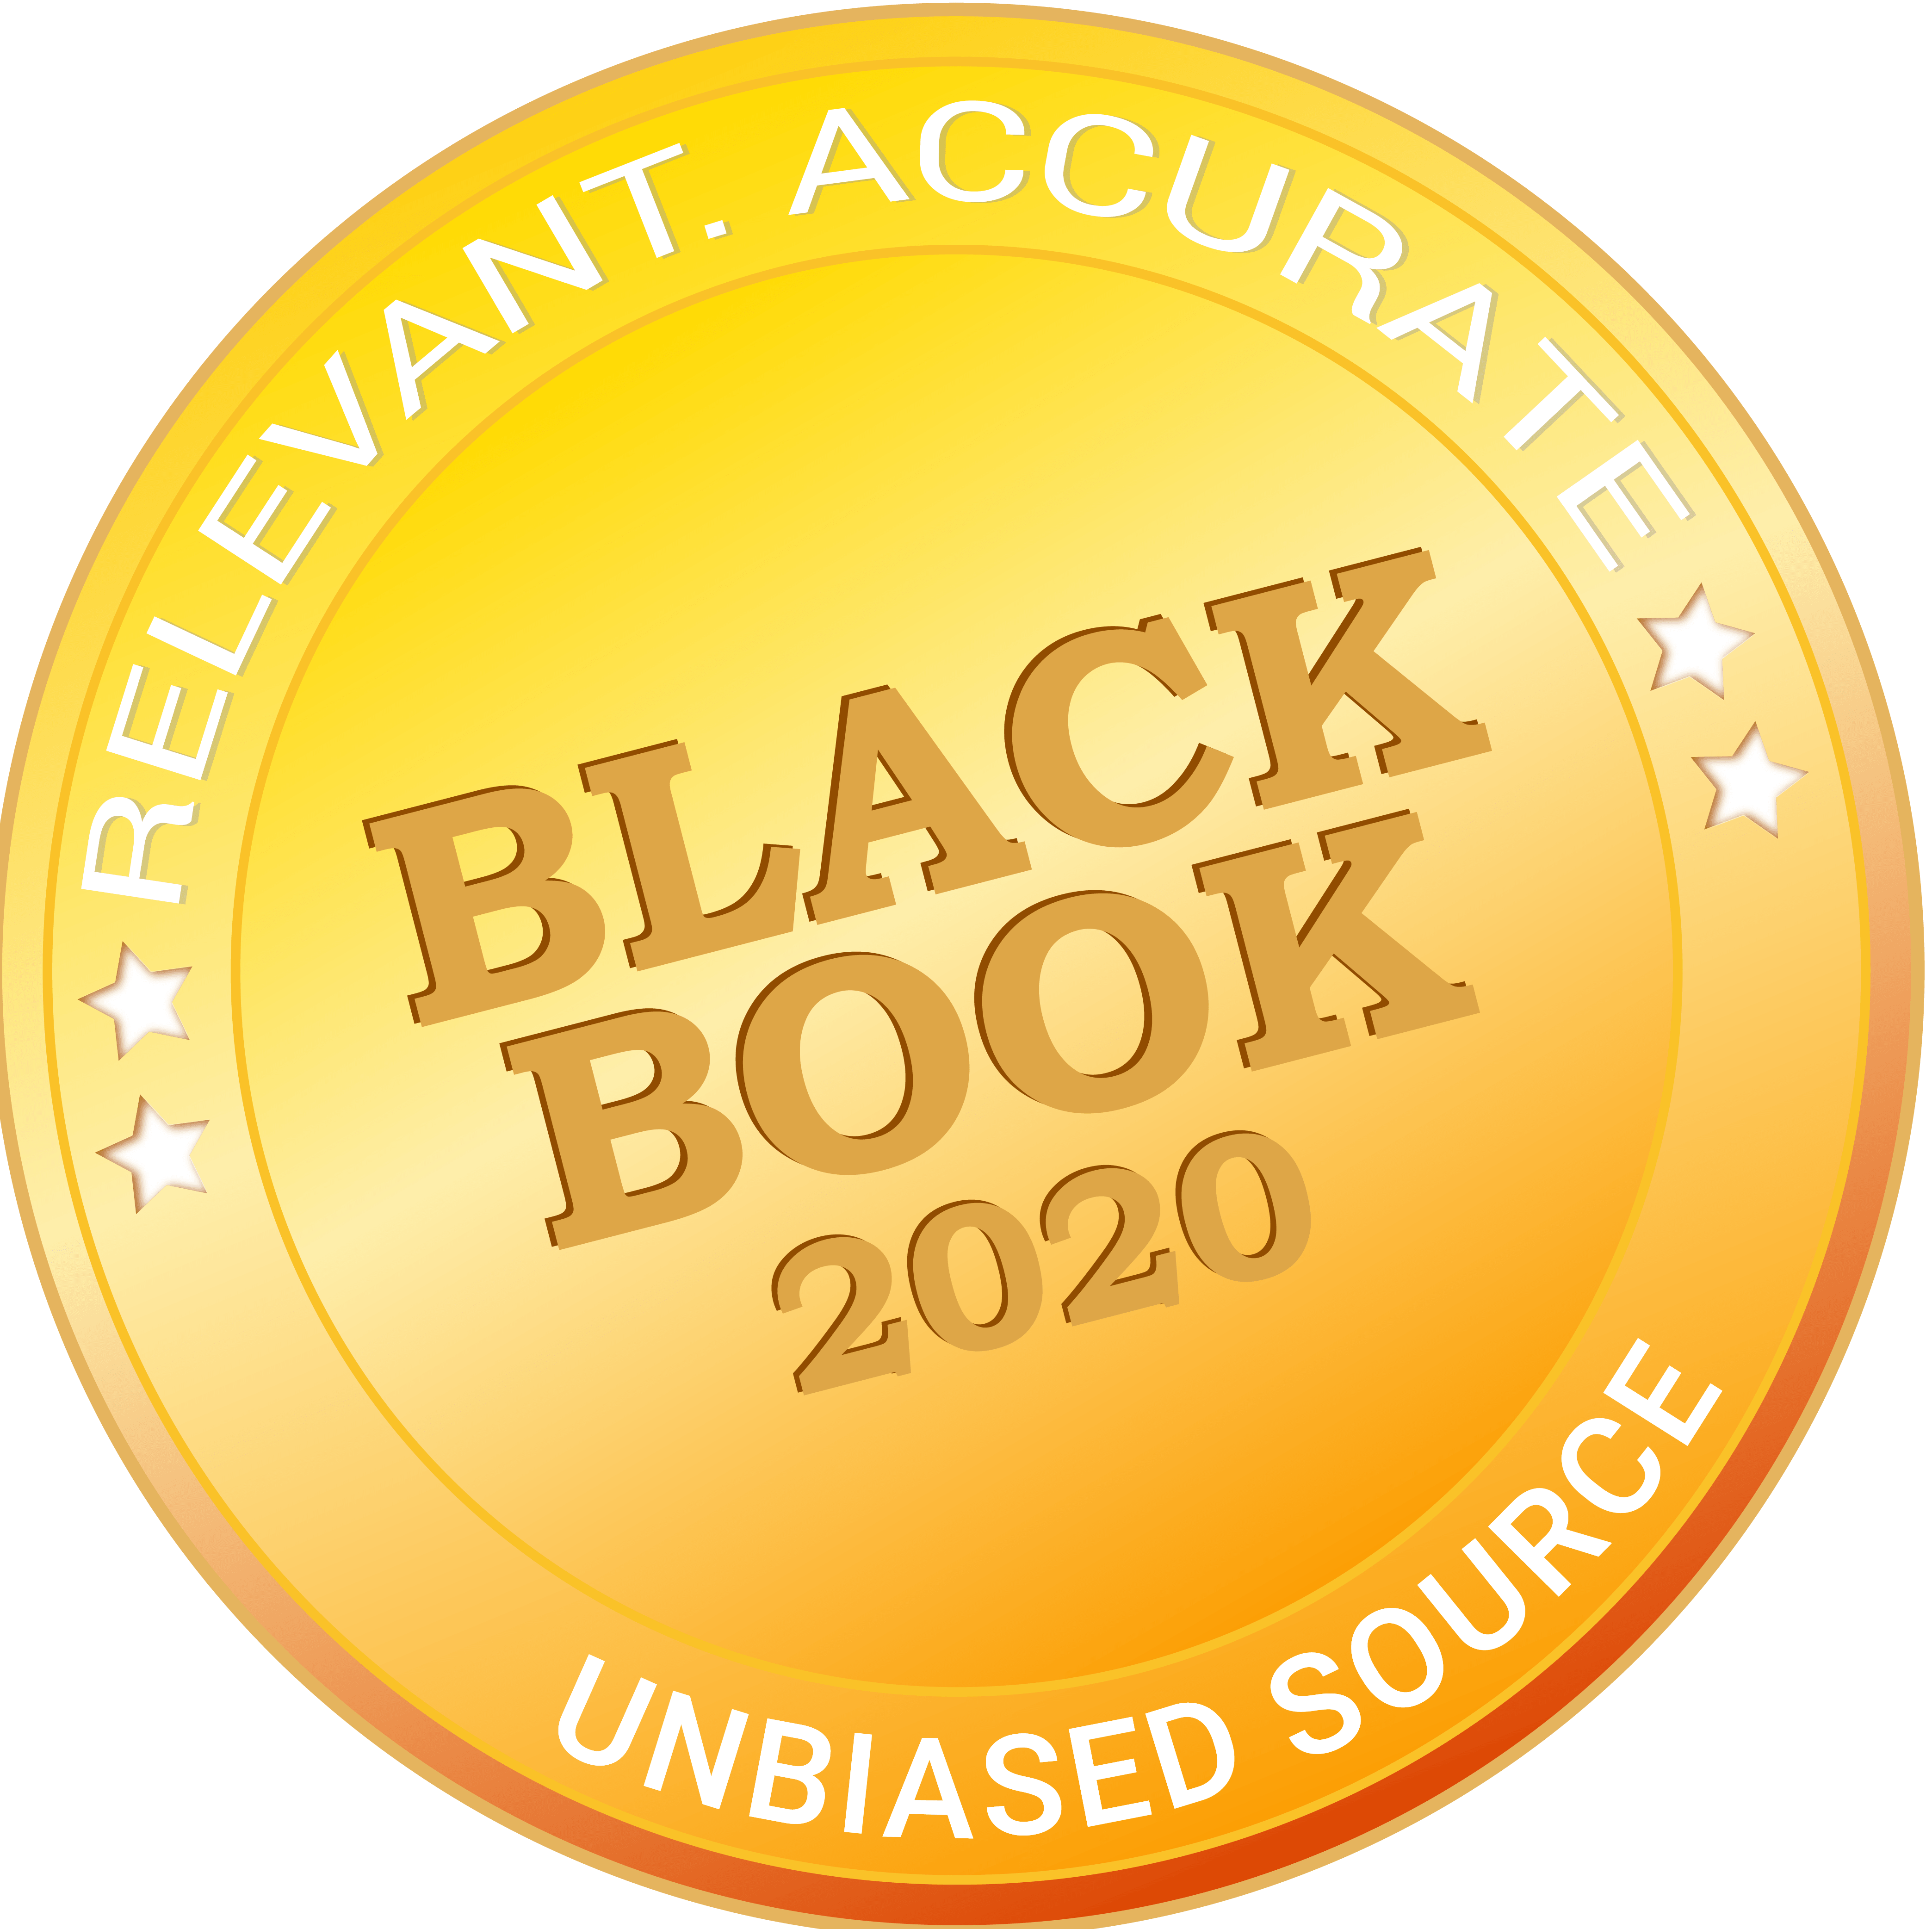 Black Book 2020 Ambulatory EHR Plastic Surgery